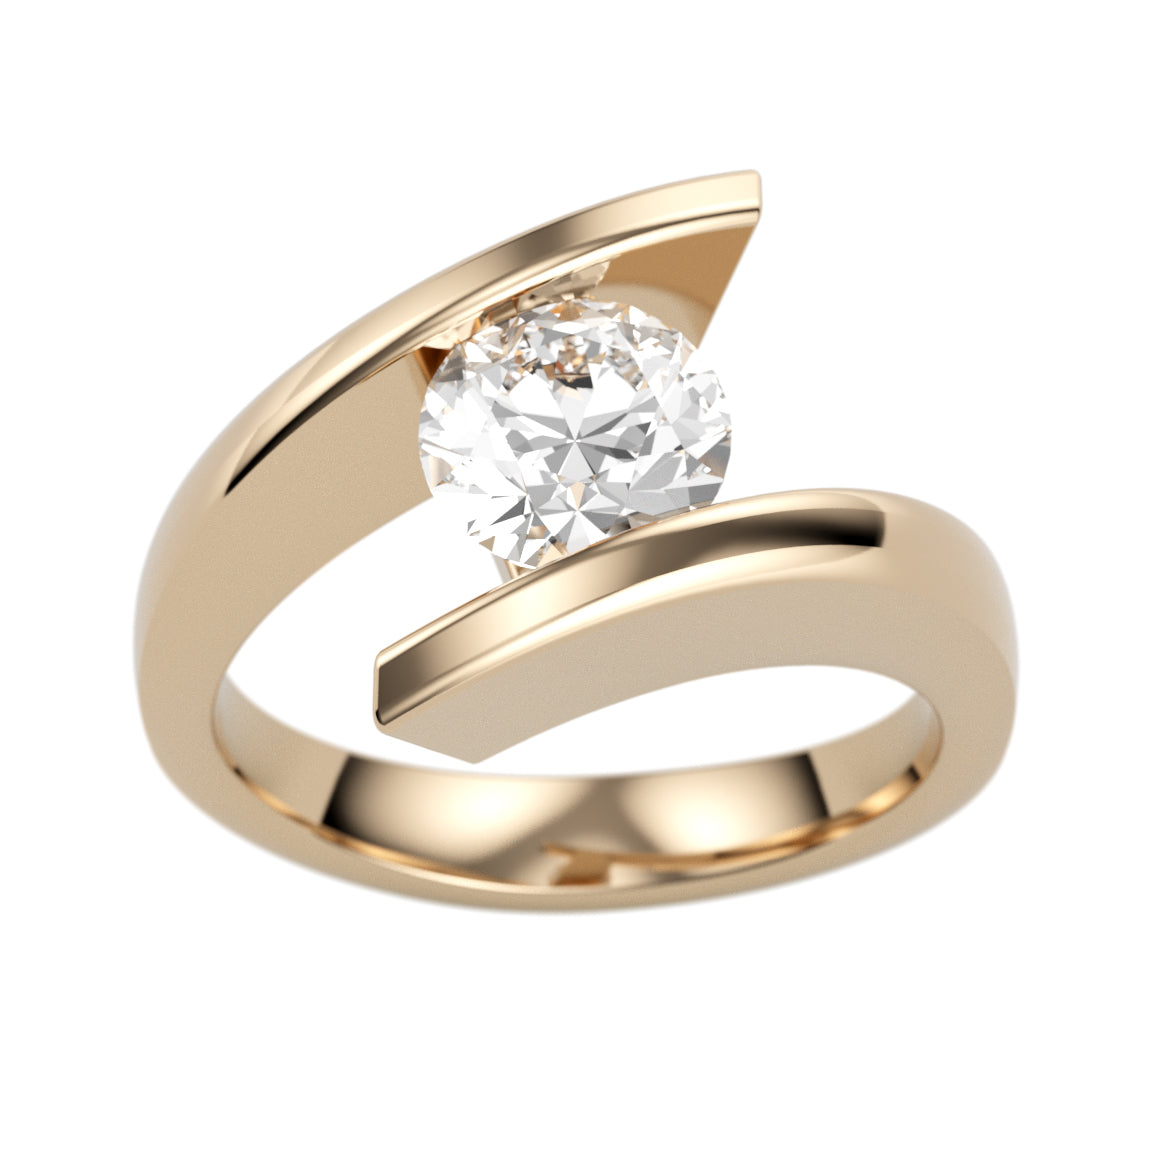 Tension-Set Engagement Ring | Bold Design | Citrus Studio 14K White Gold / 5.5 / Natural Diamond